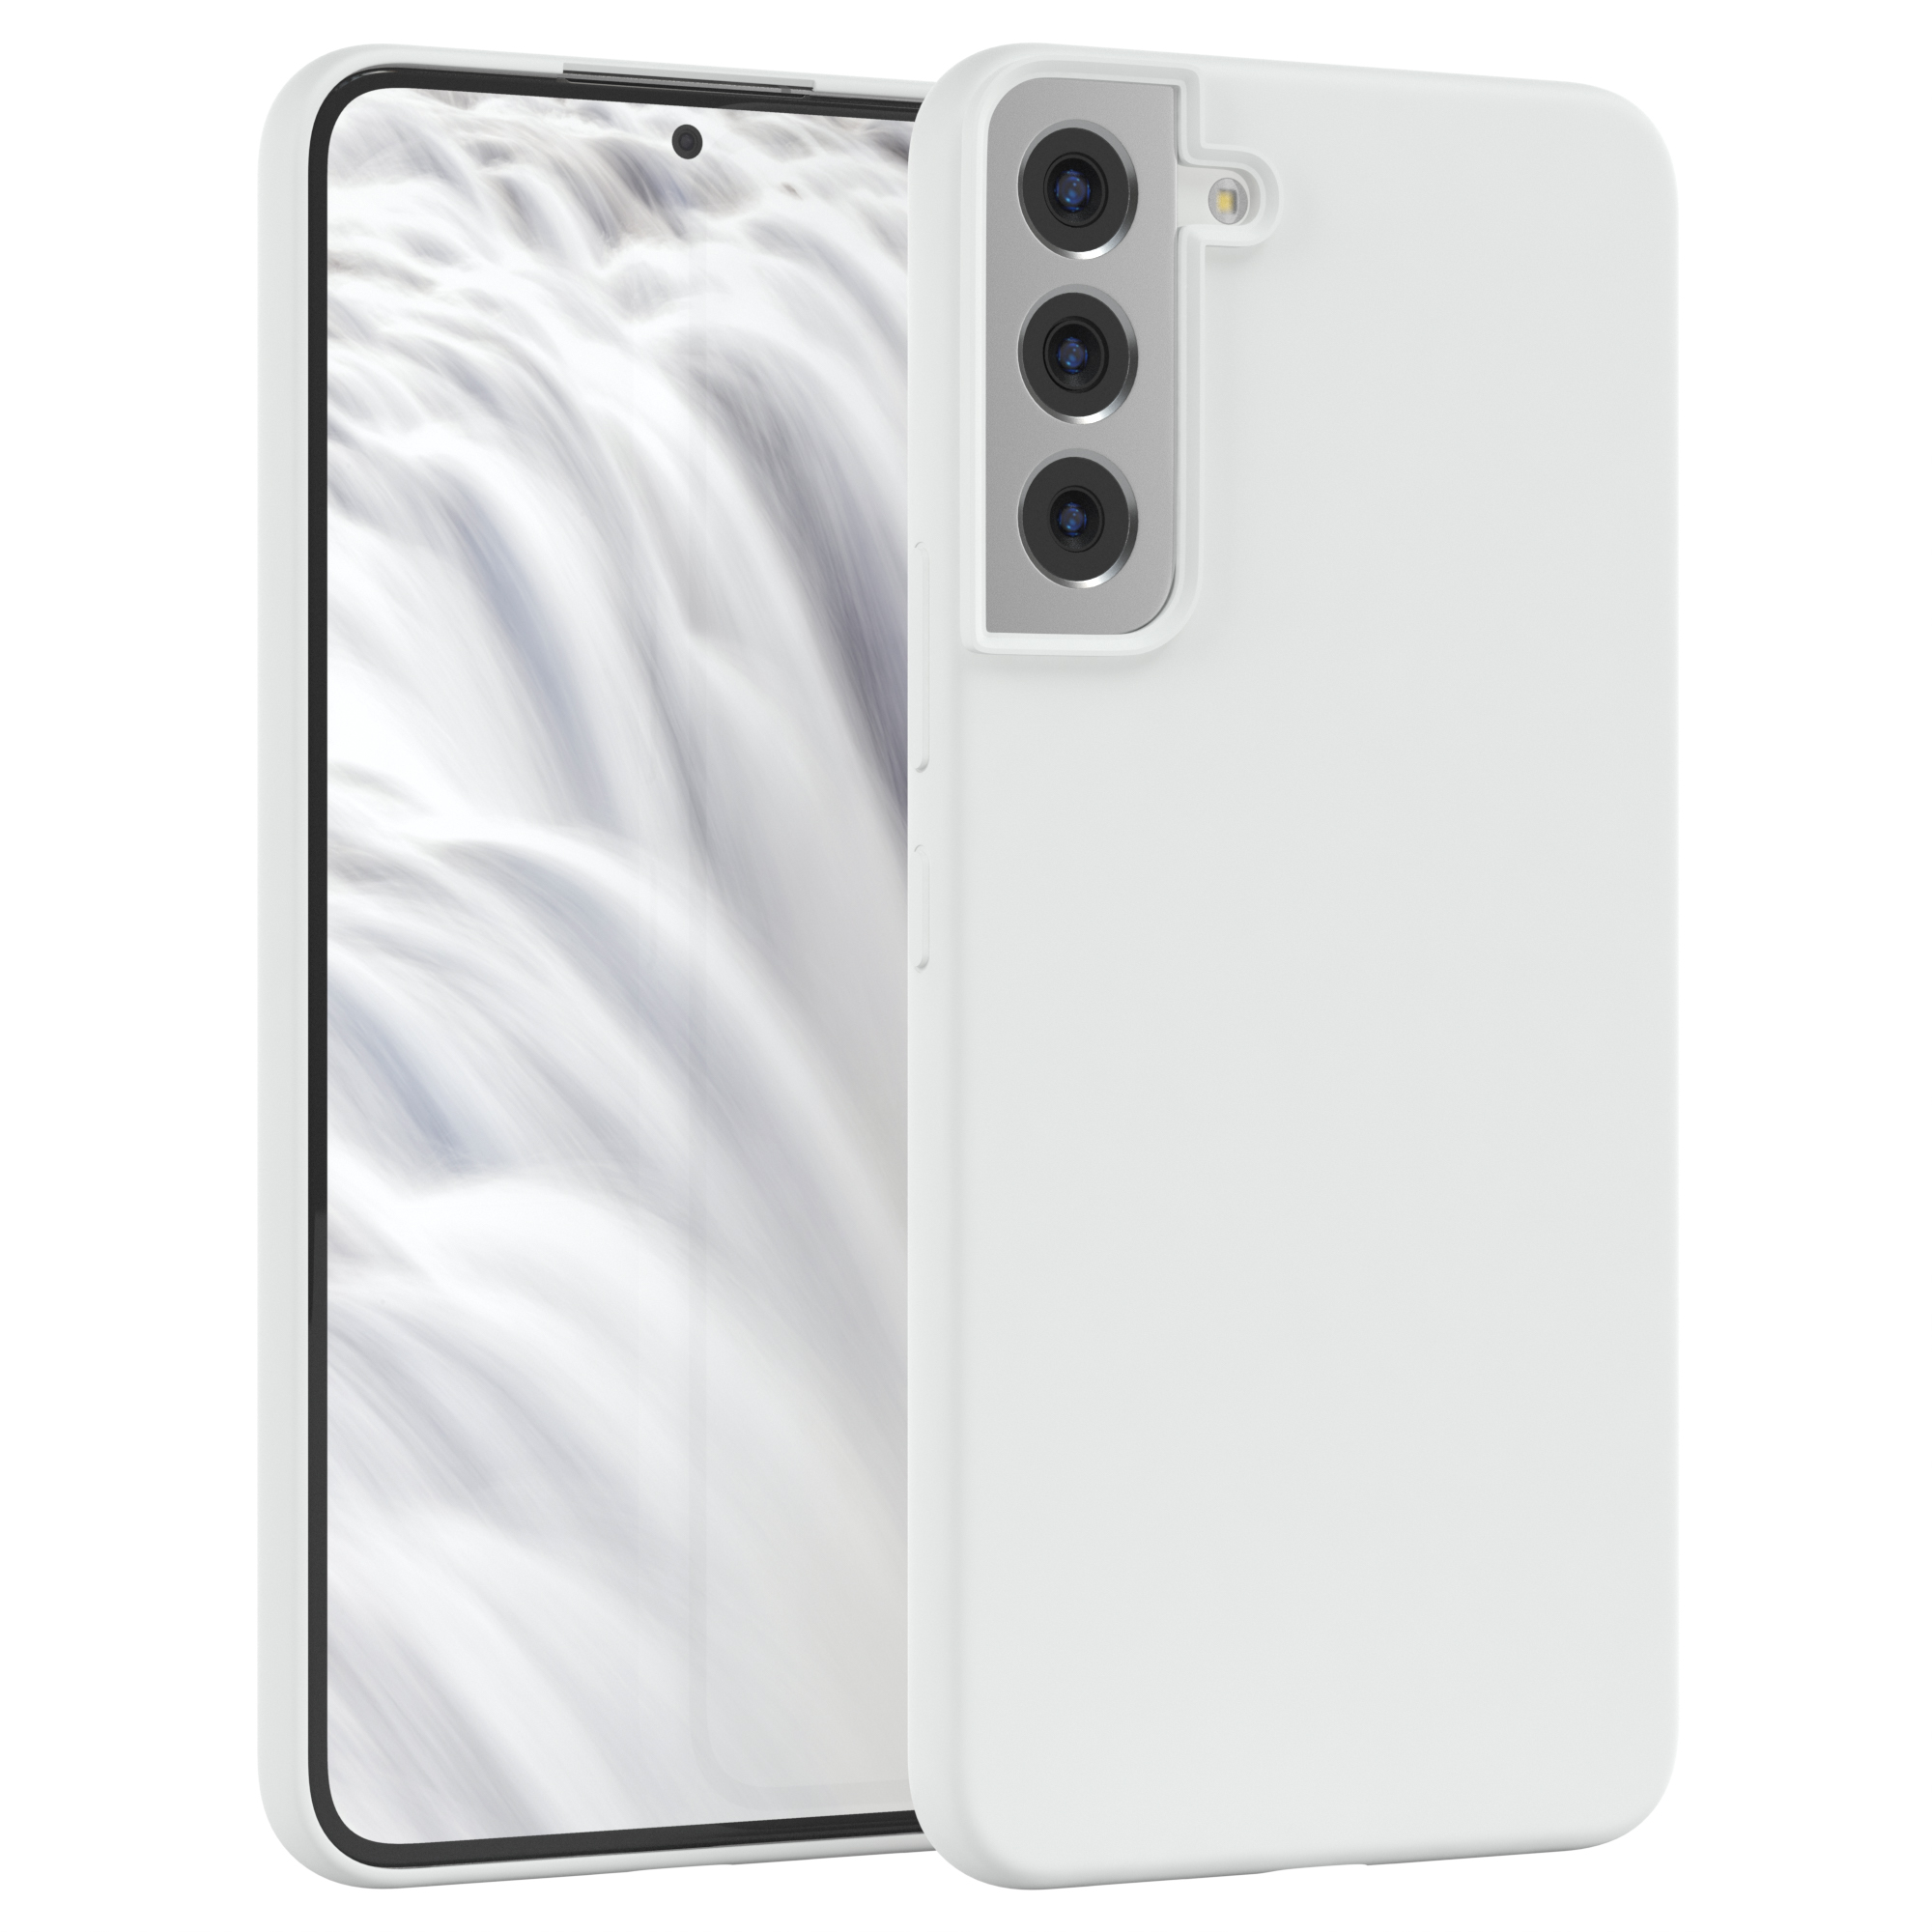 EAZY CASE Premium Silikon Handycase, Weiß Samsung, Backcover, Galaxy Plus S22 5G